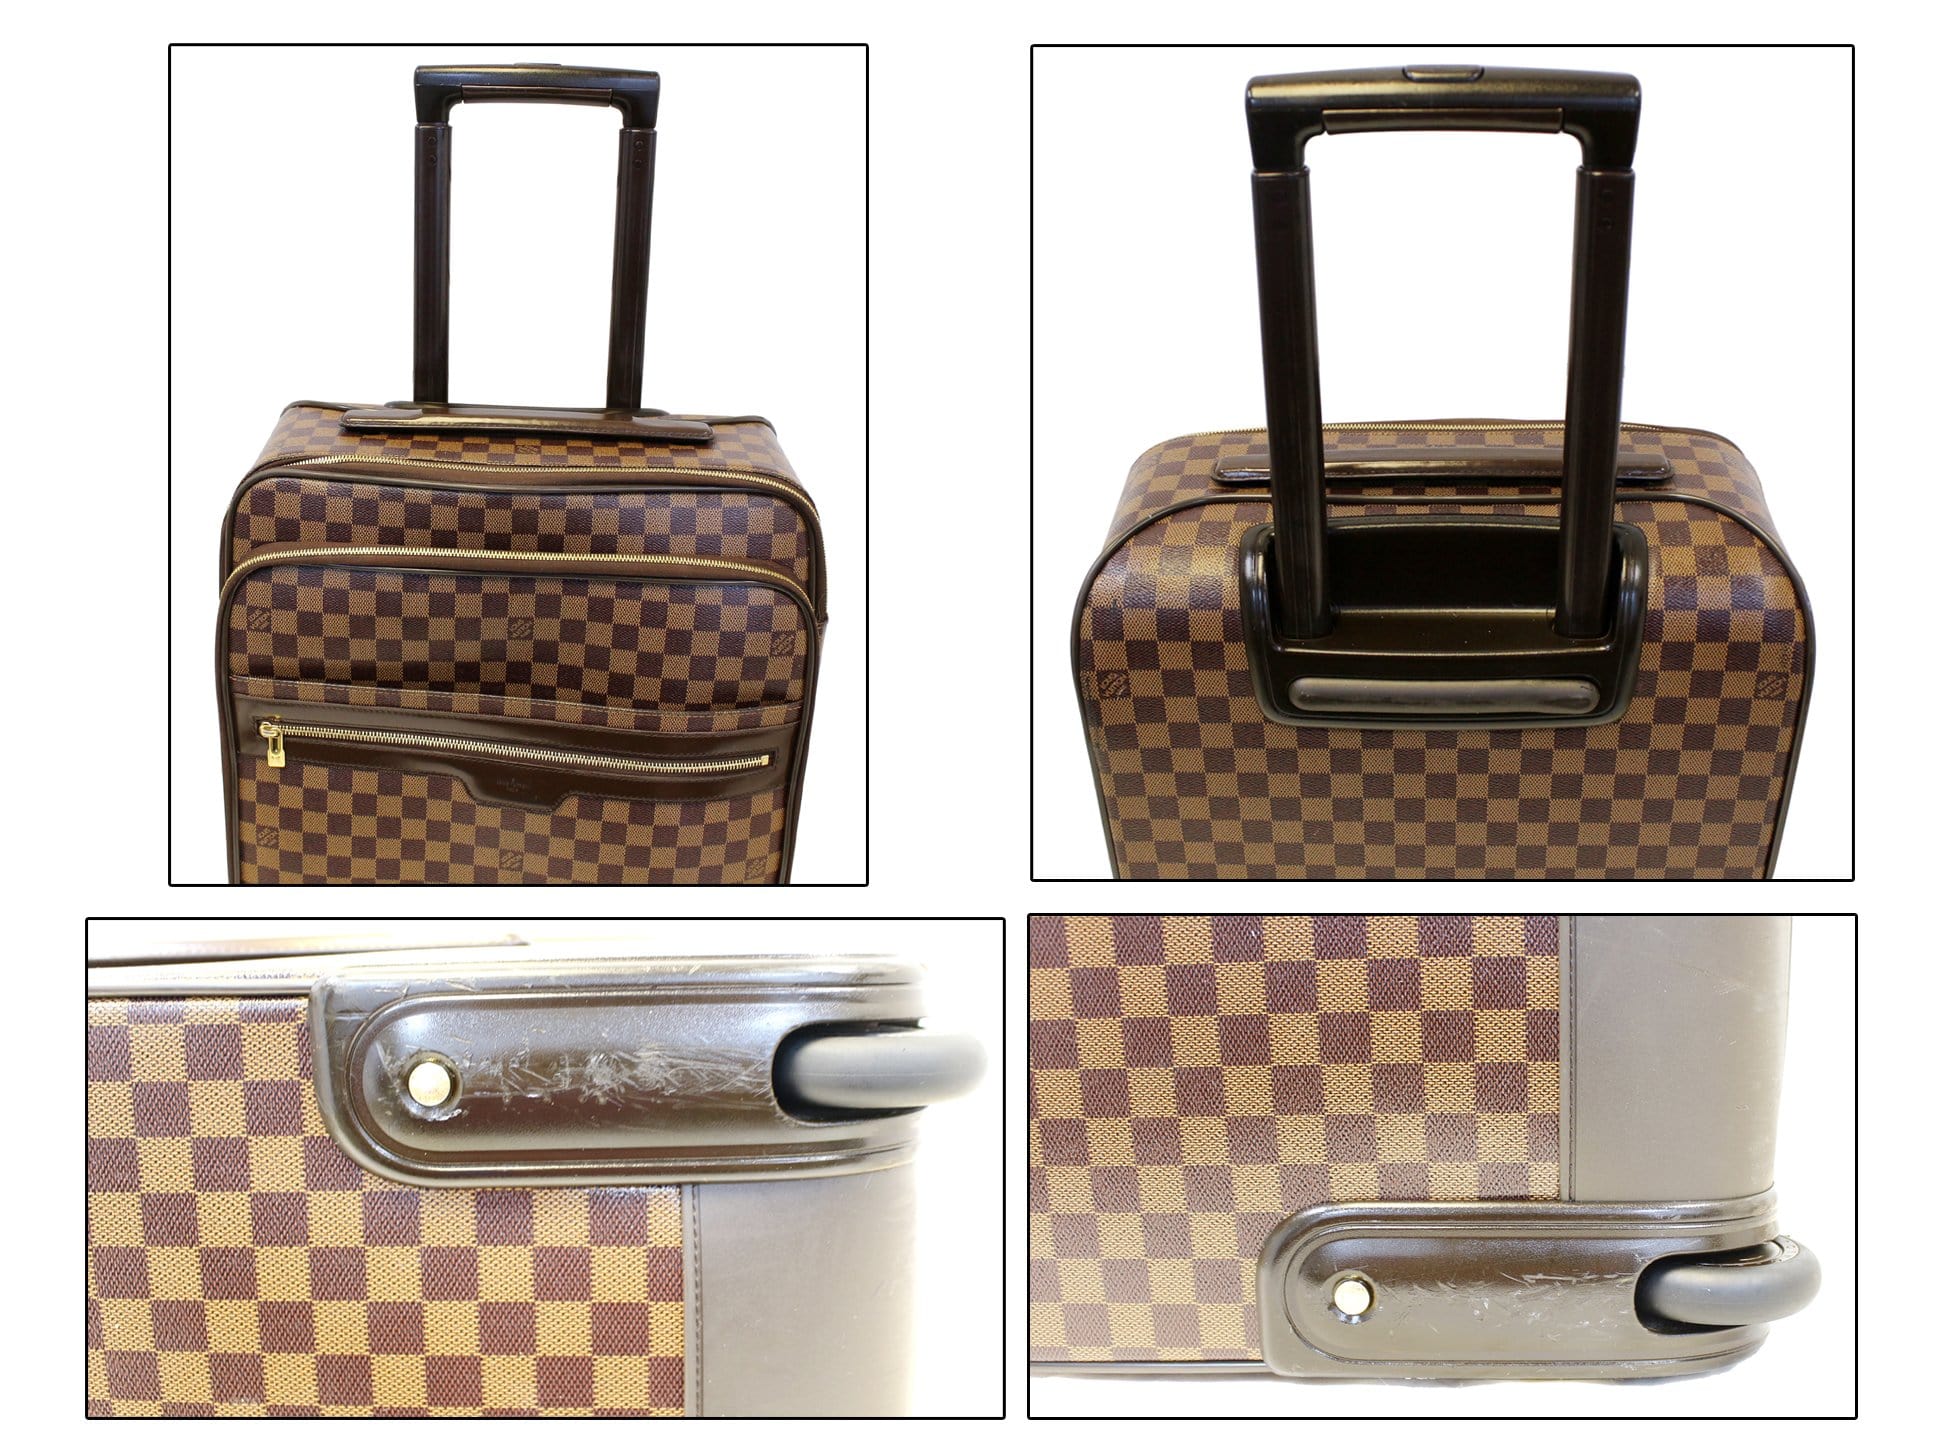 LOUIS VUITTON Damier Ebene Pegase 55 Business Suitcase